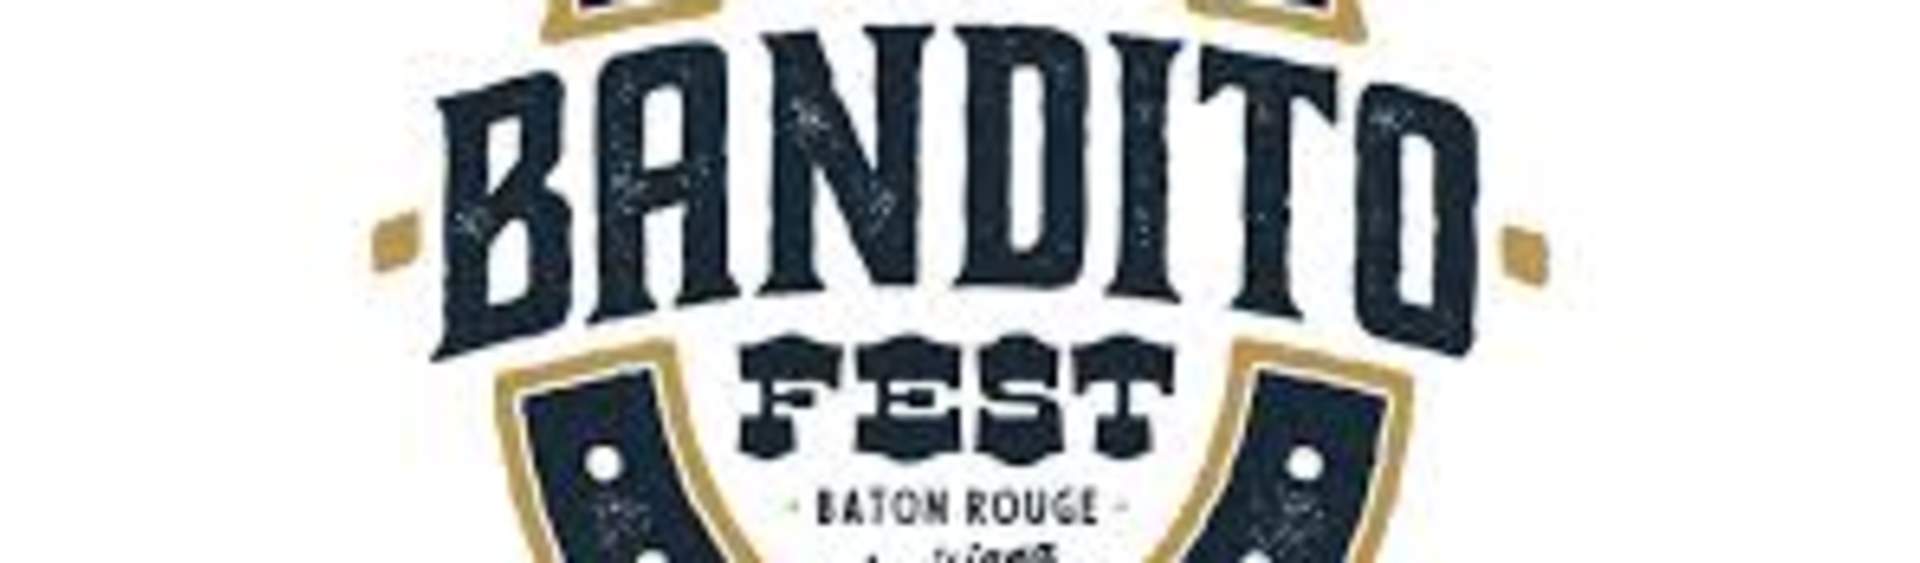 2021 Bandito Food & Music Festival